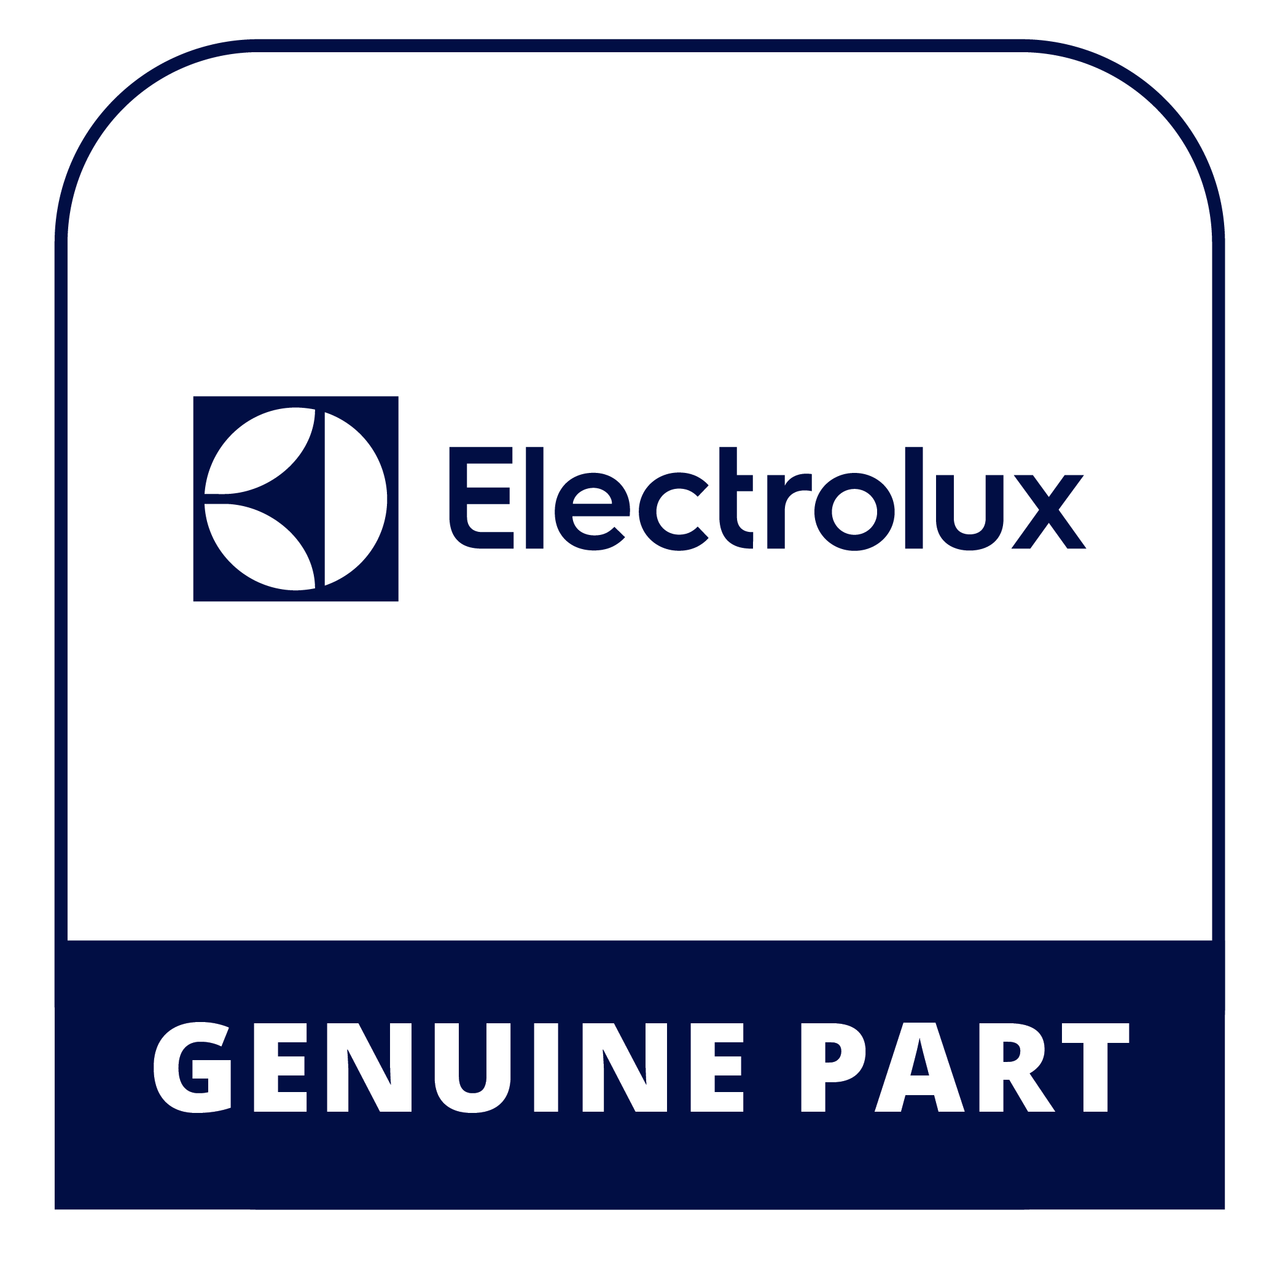 Frigidaire - Electrolux 316246105 Handle - Genuine Electrolux Part